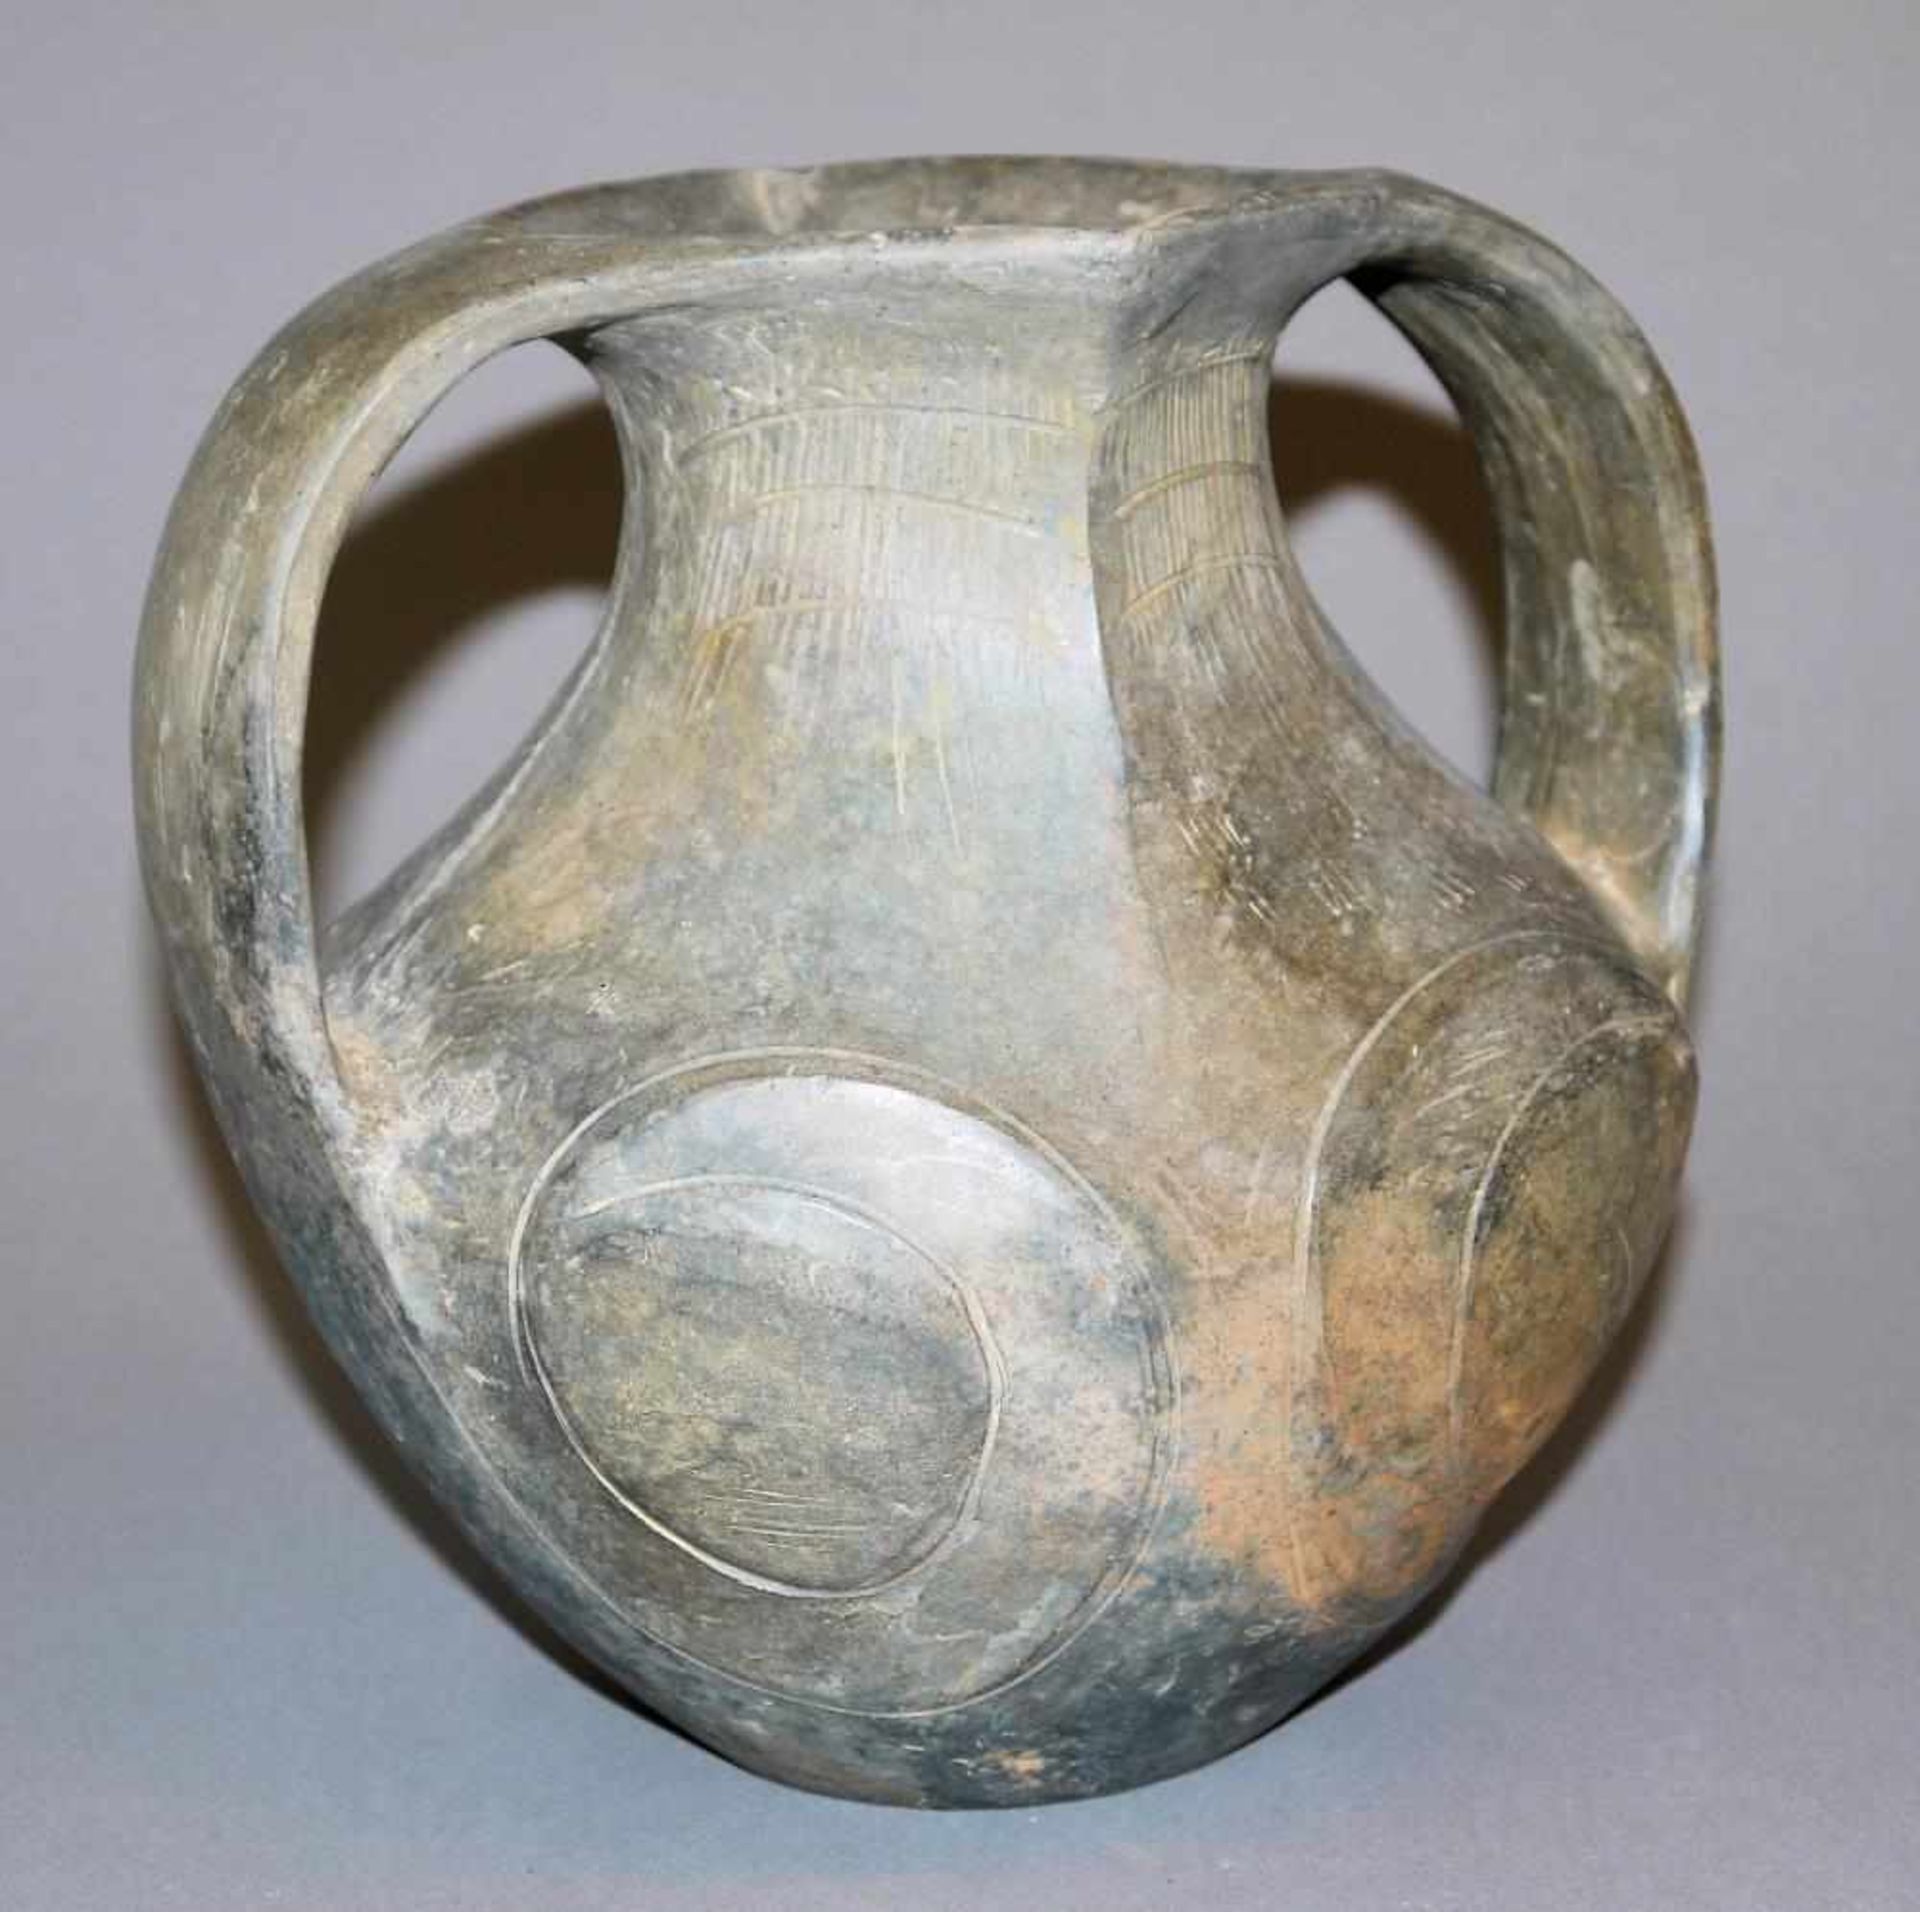 Lifan-Henkelgefäß der Han-Zeit, China 2. Jh. v. – 2. Jh. n. Chr. Amphorengefäß aus dunklem Ton, zwei